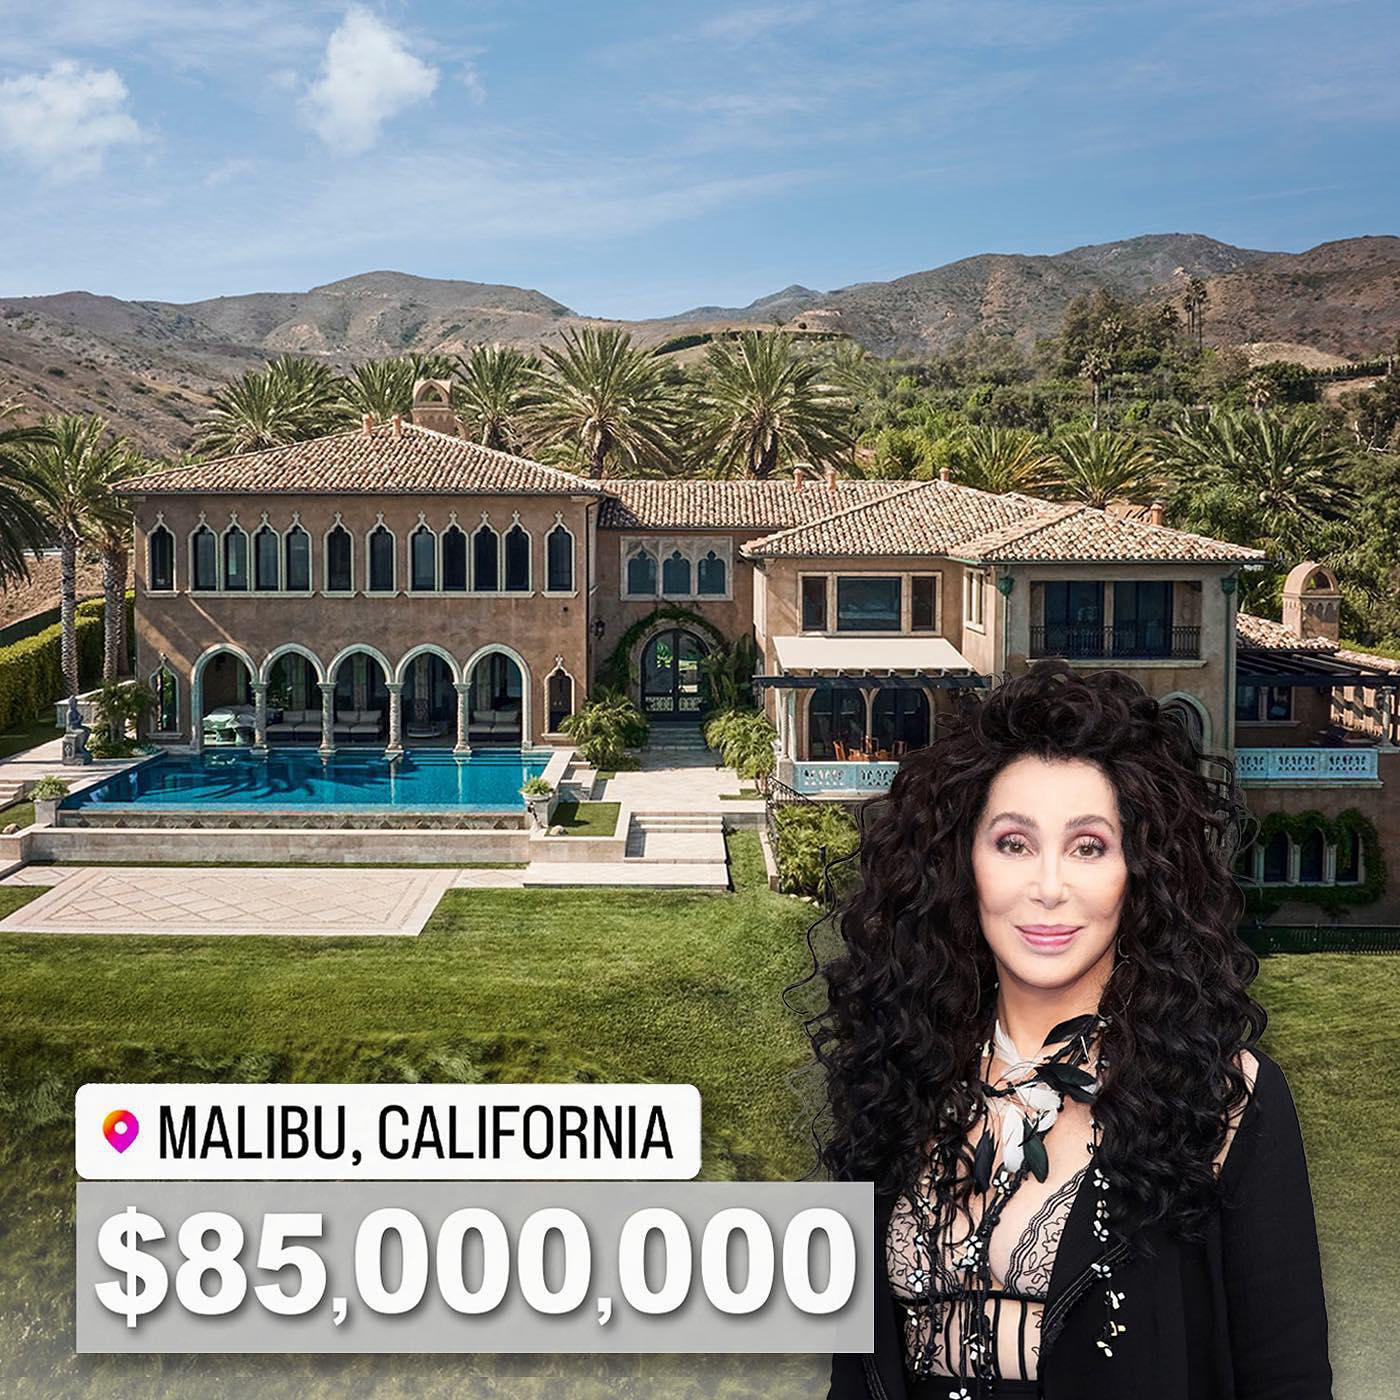 Millionaire Homes - The Goddess of Pop #cher is asking $85m for her massive Malibu mansion